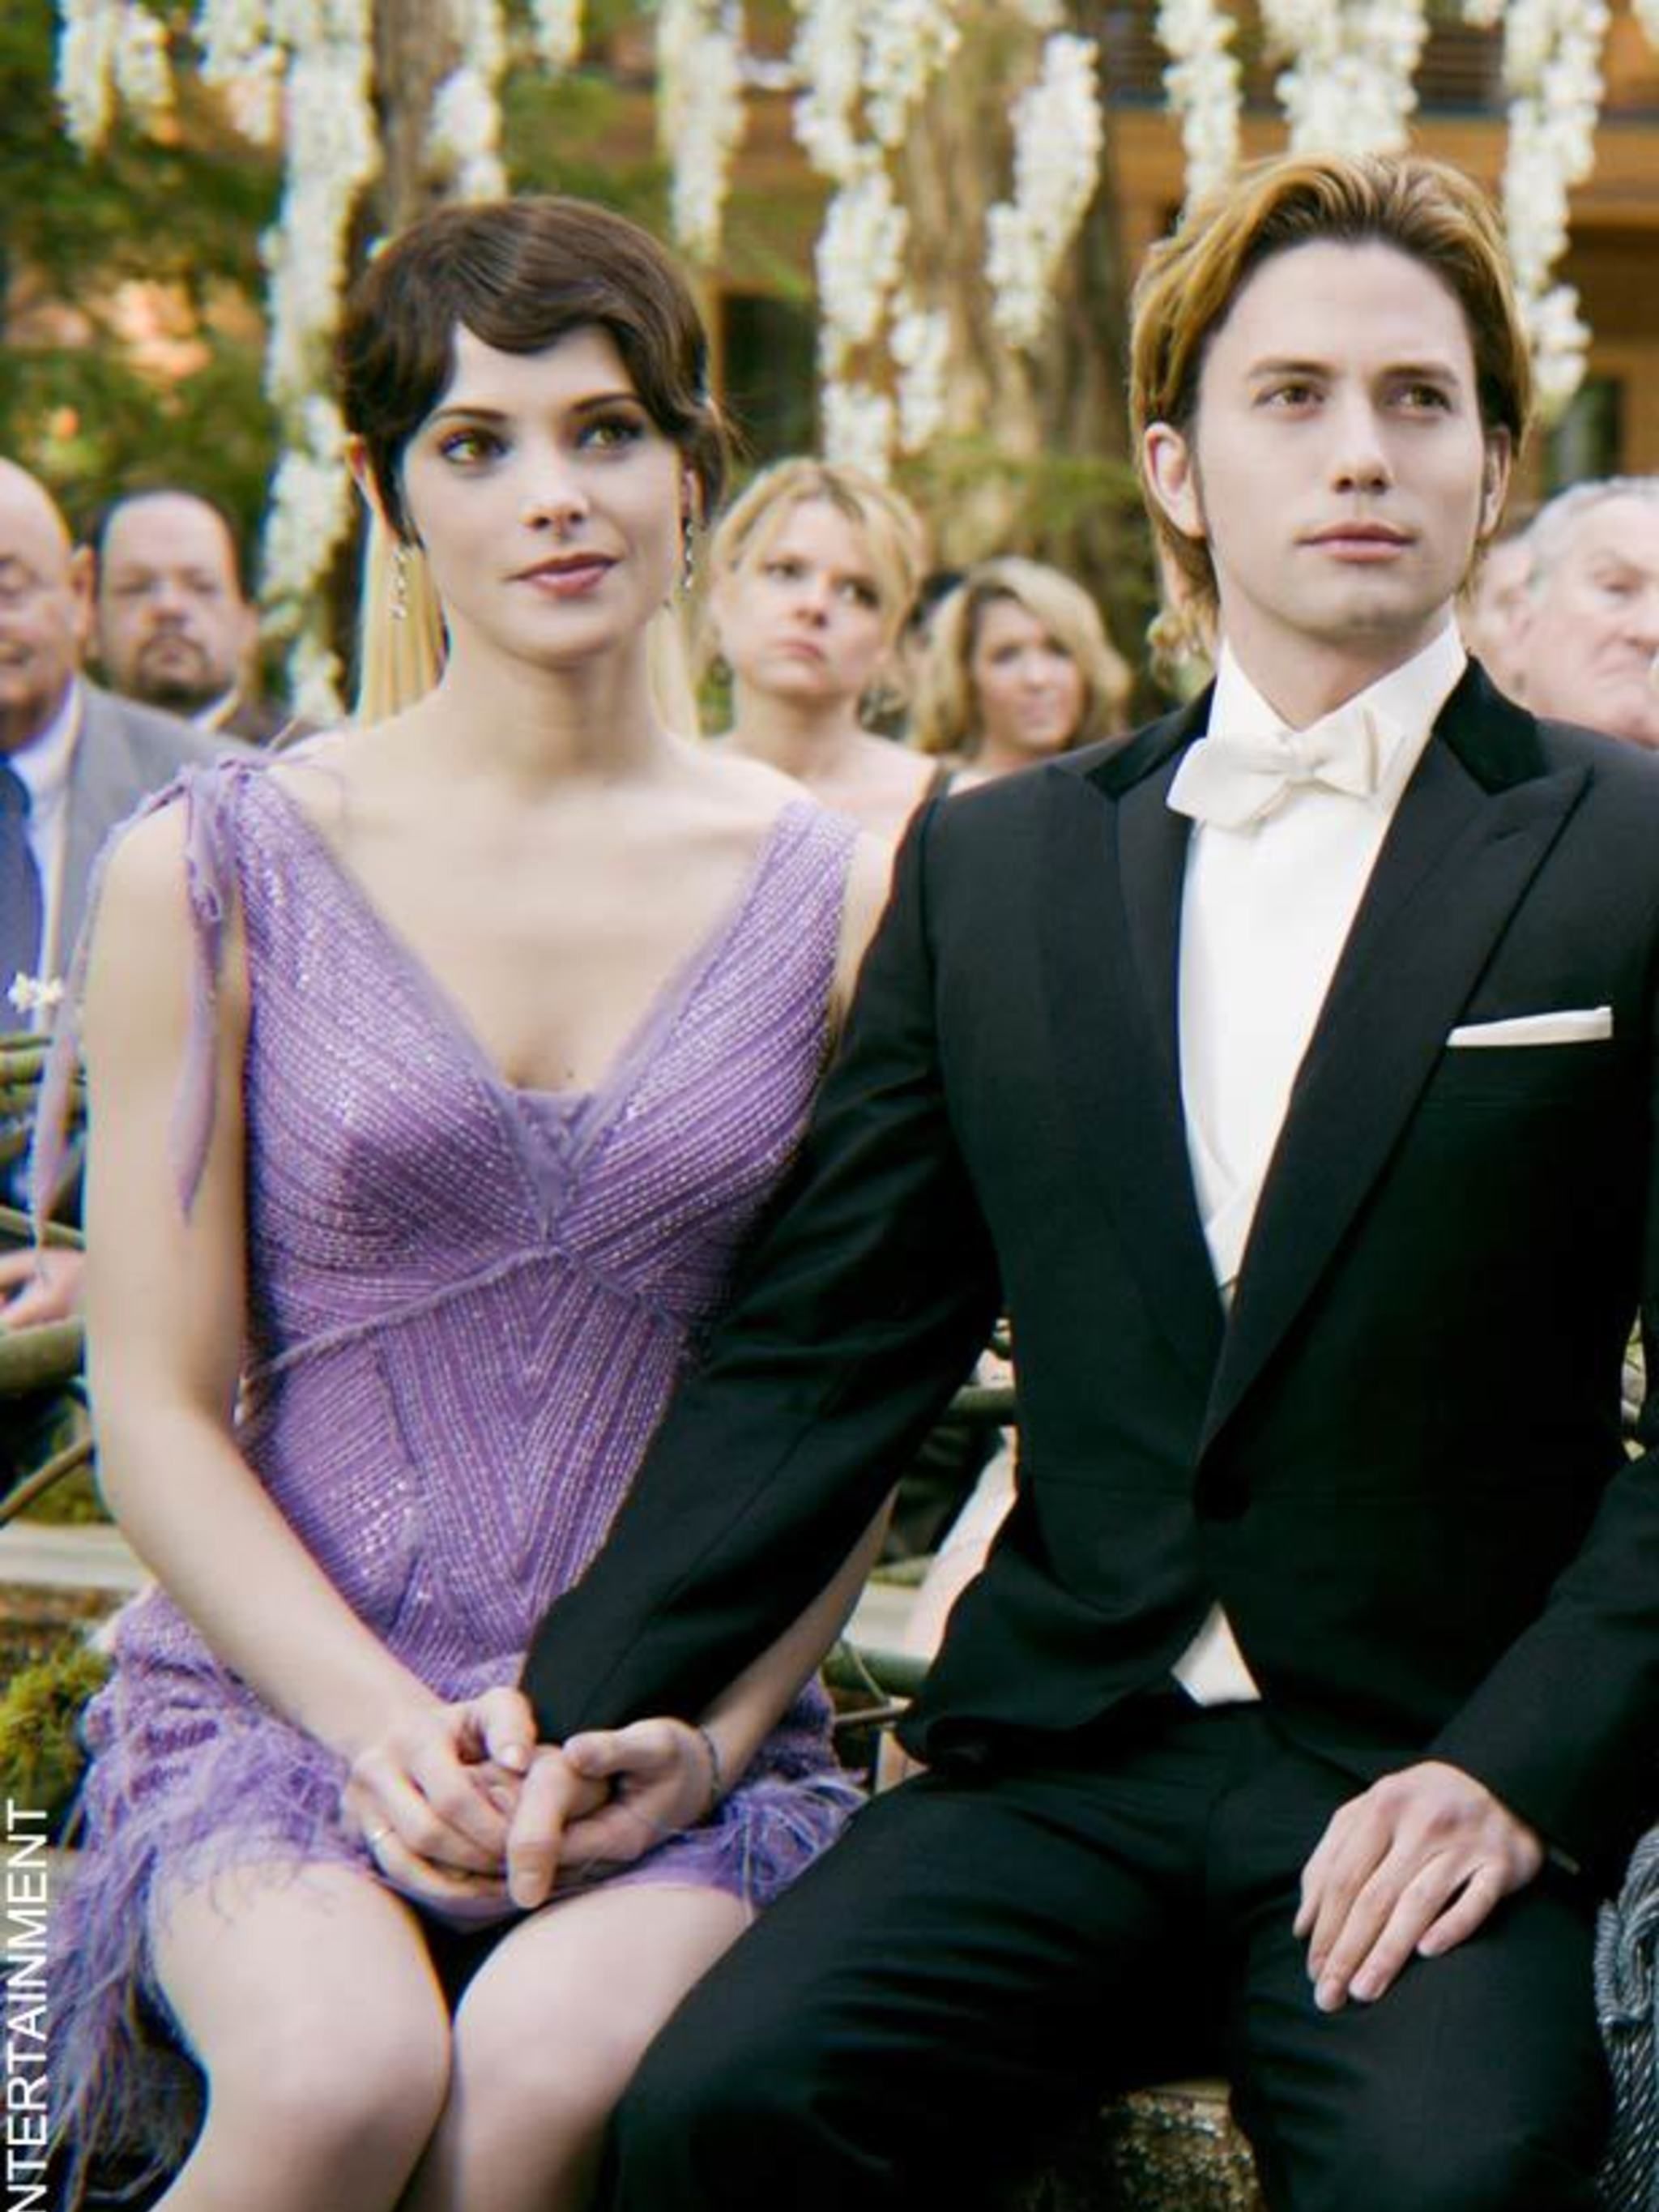 A Peek at the Twilight Wedding